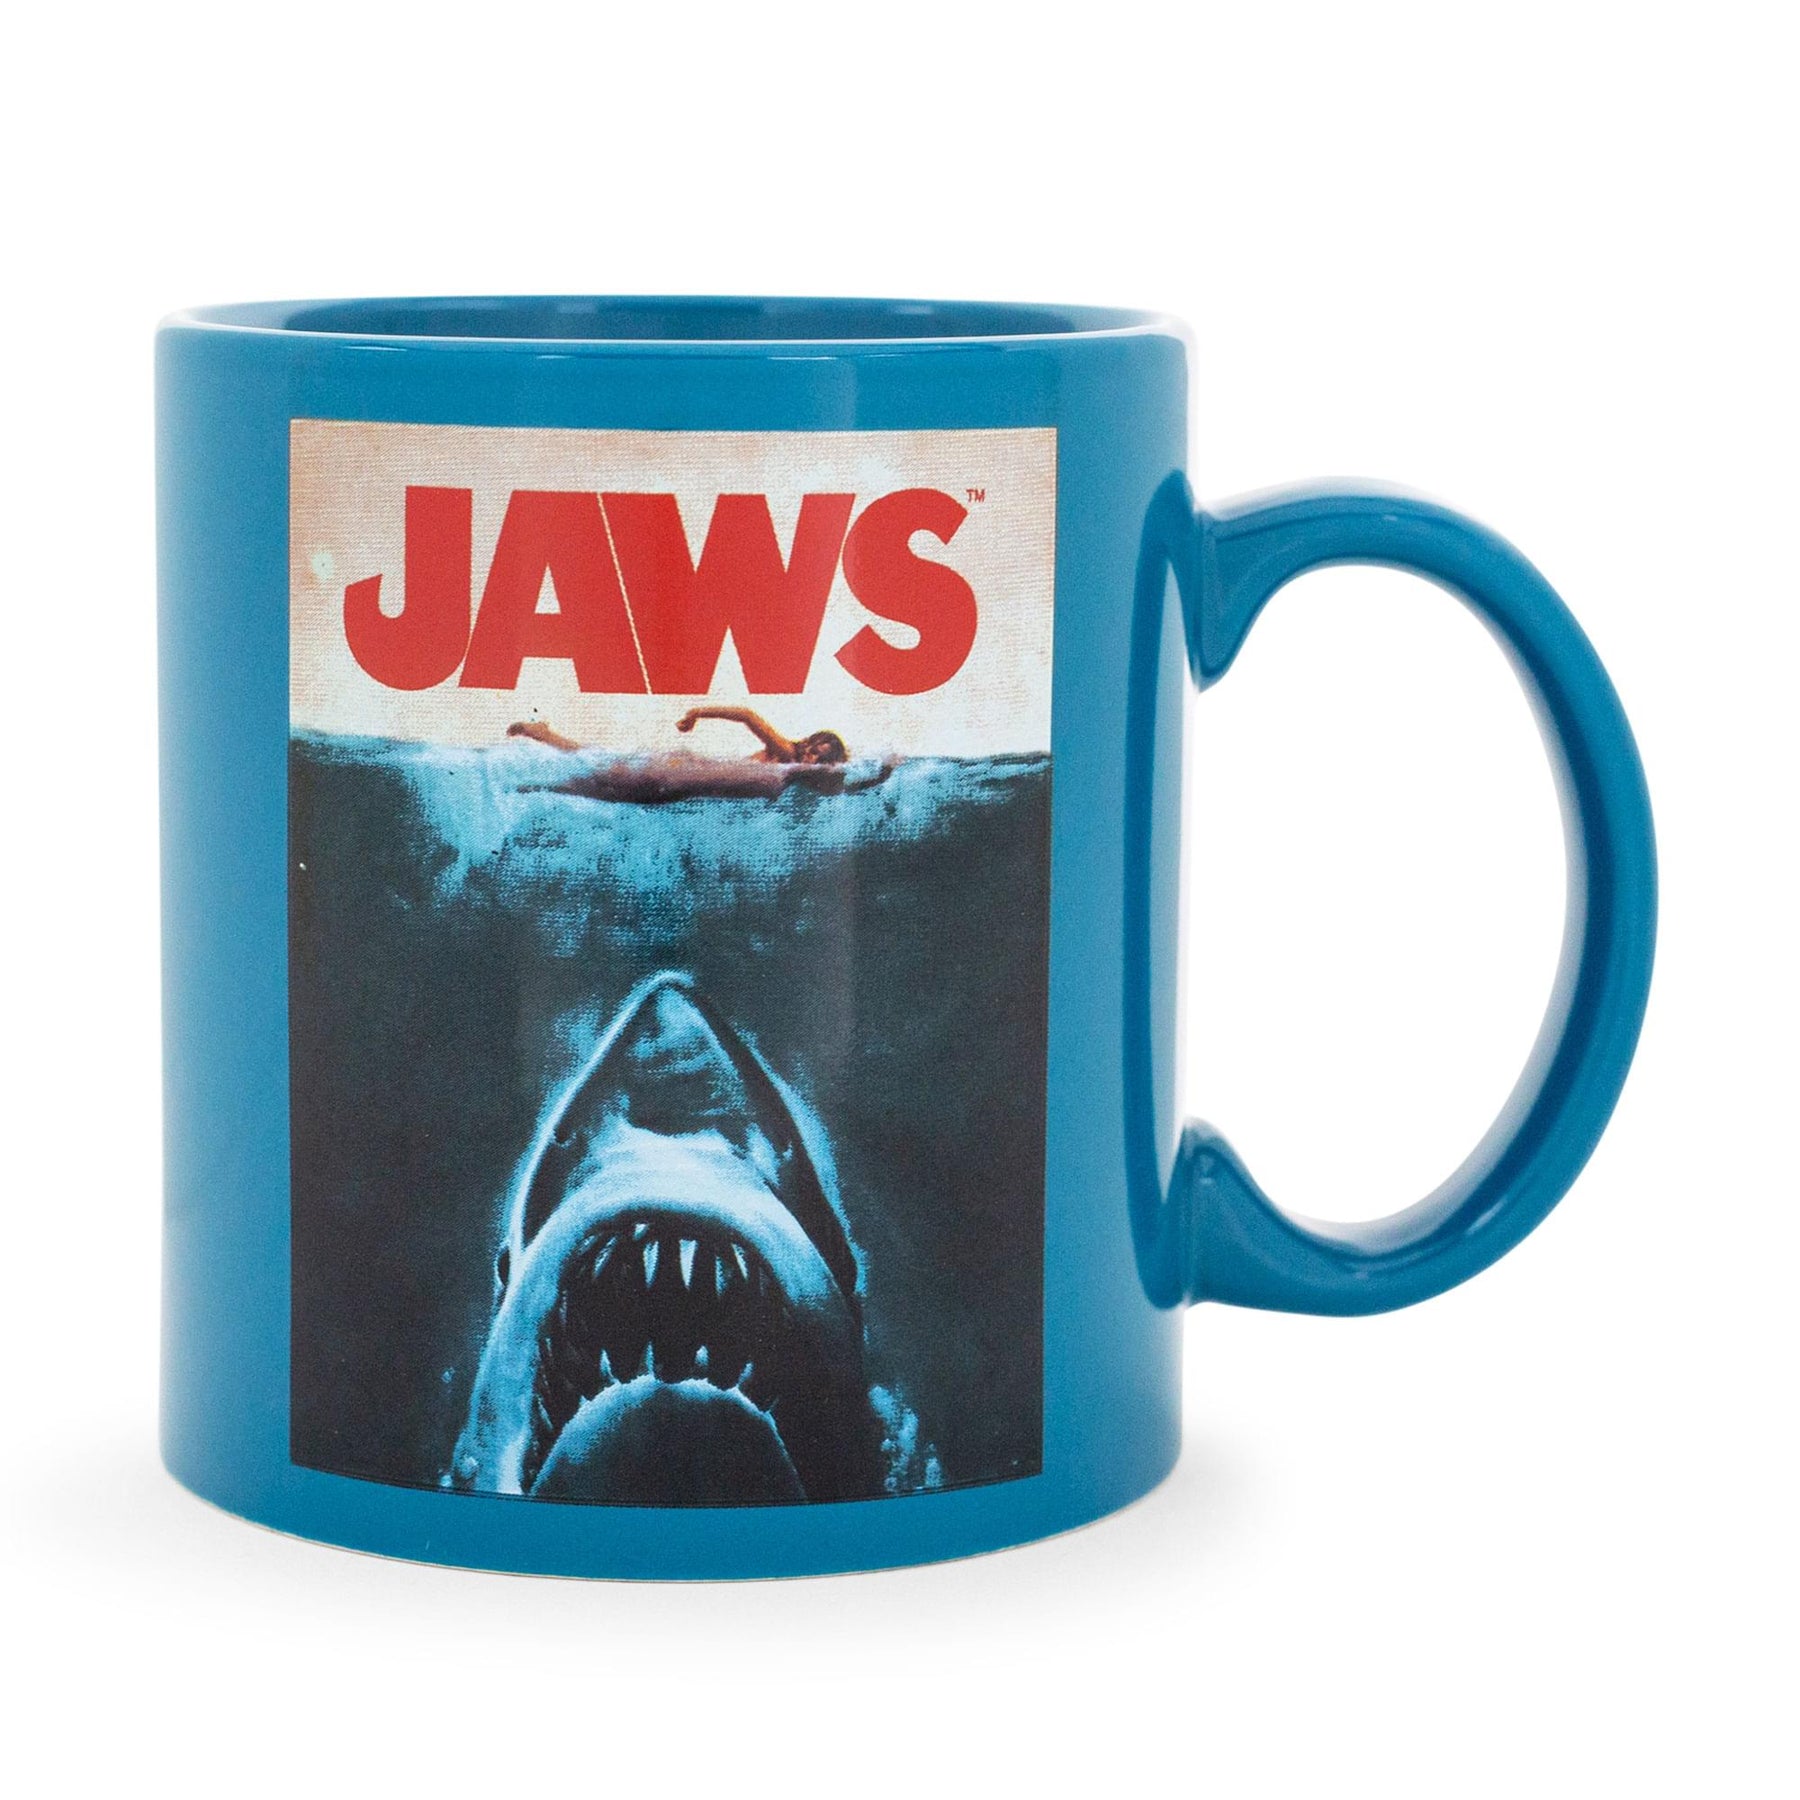 JAWS Amity Island Population Ceramic Mug | Holds 20 Ounces